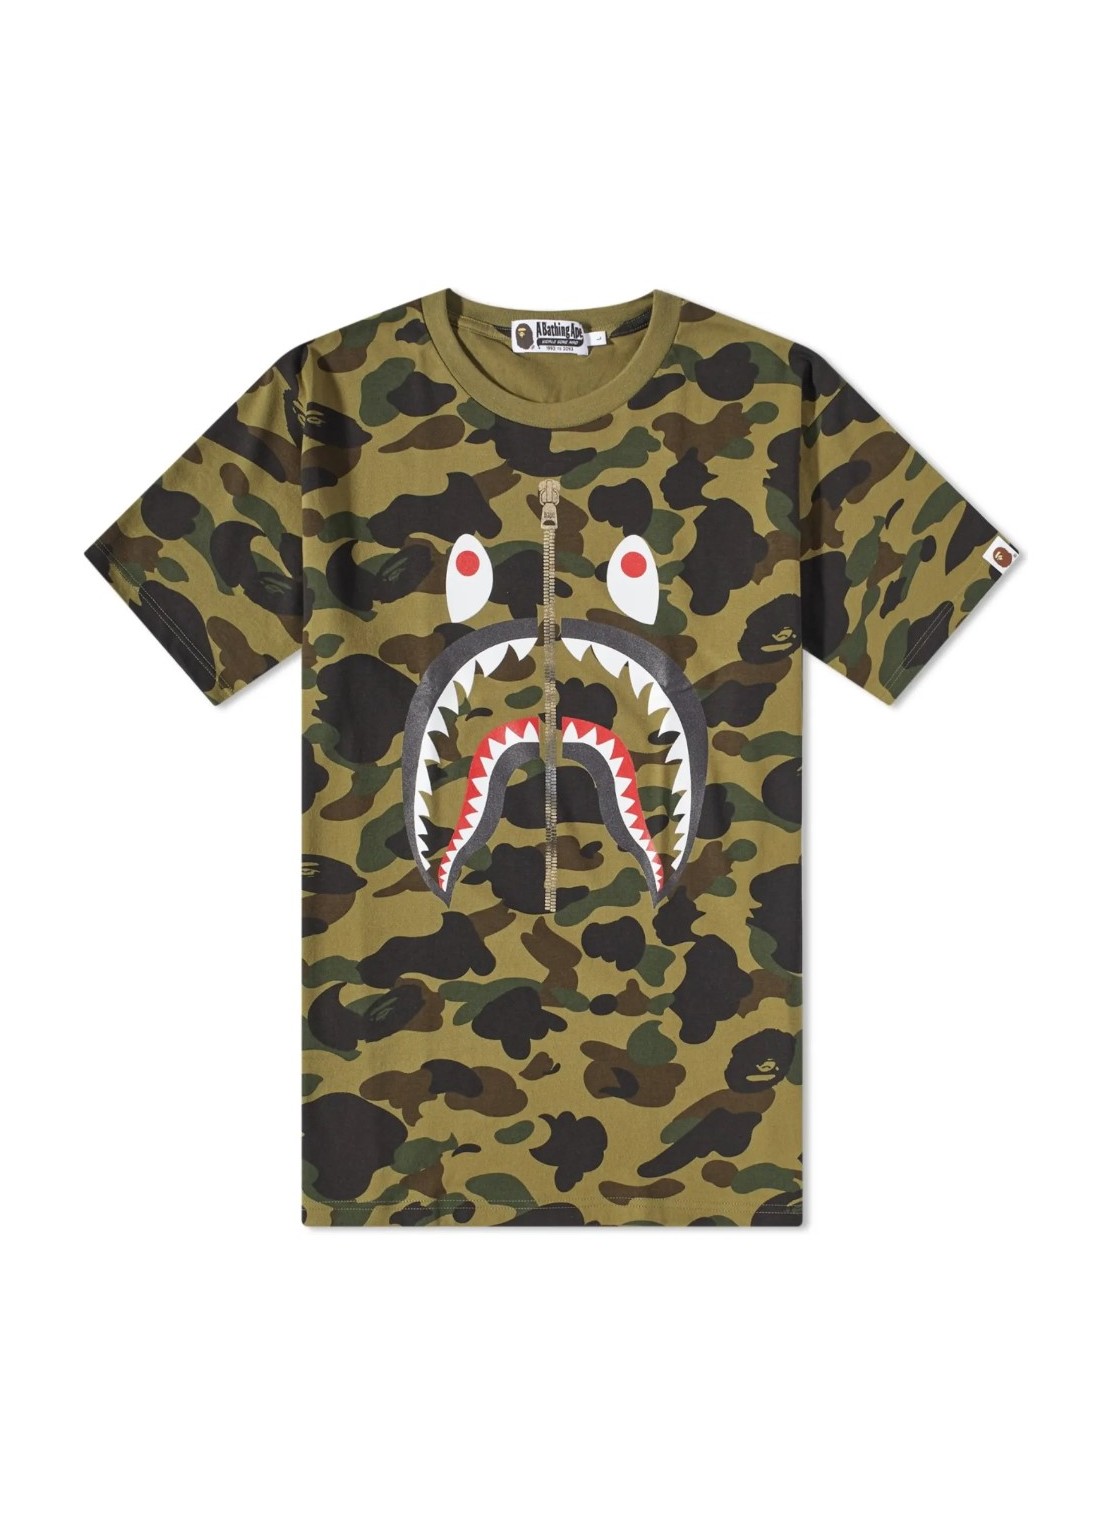 Camiseta bape t-shirt man 1st camo shark tee mens 001csj201002m grn talla XXL
 